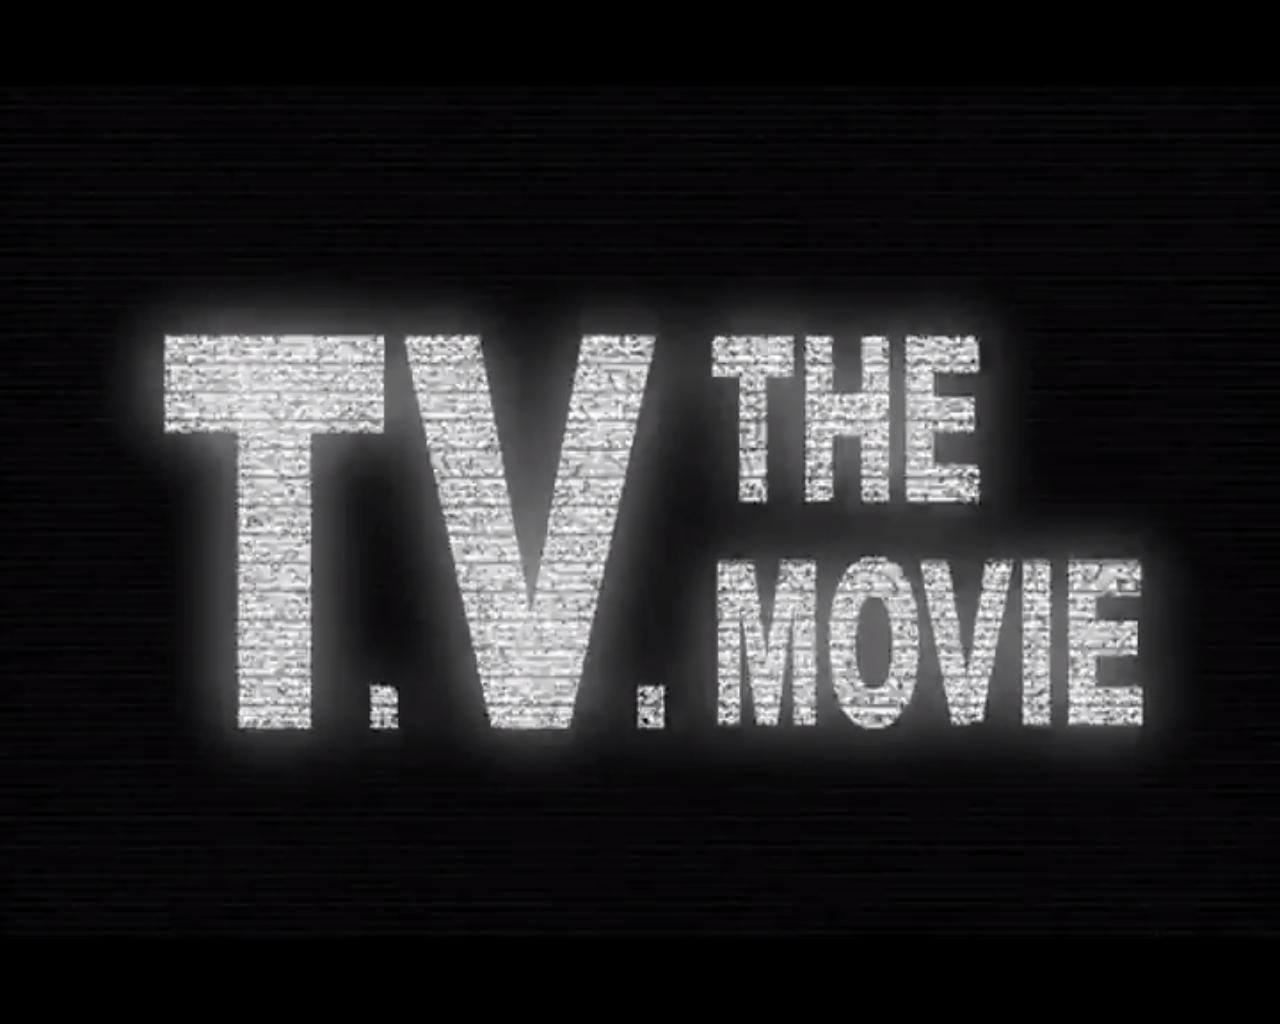 T.V.: The Movie